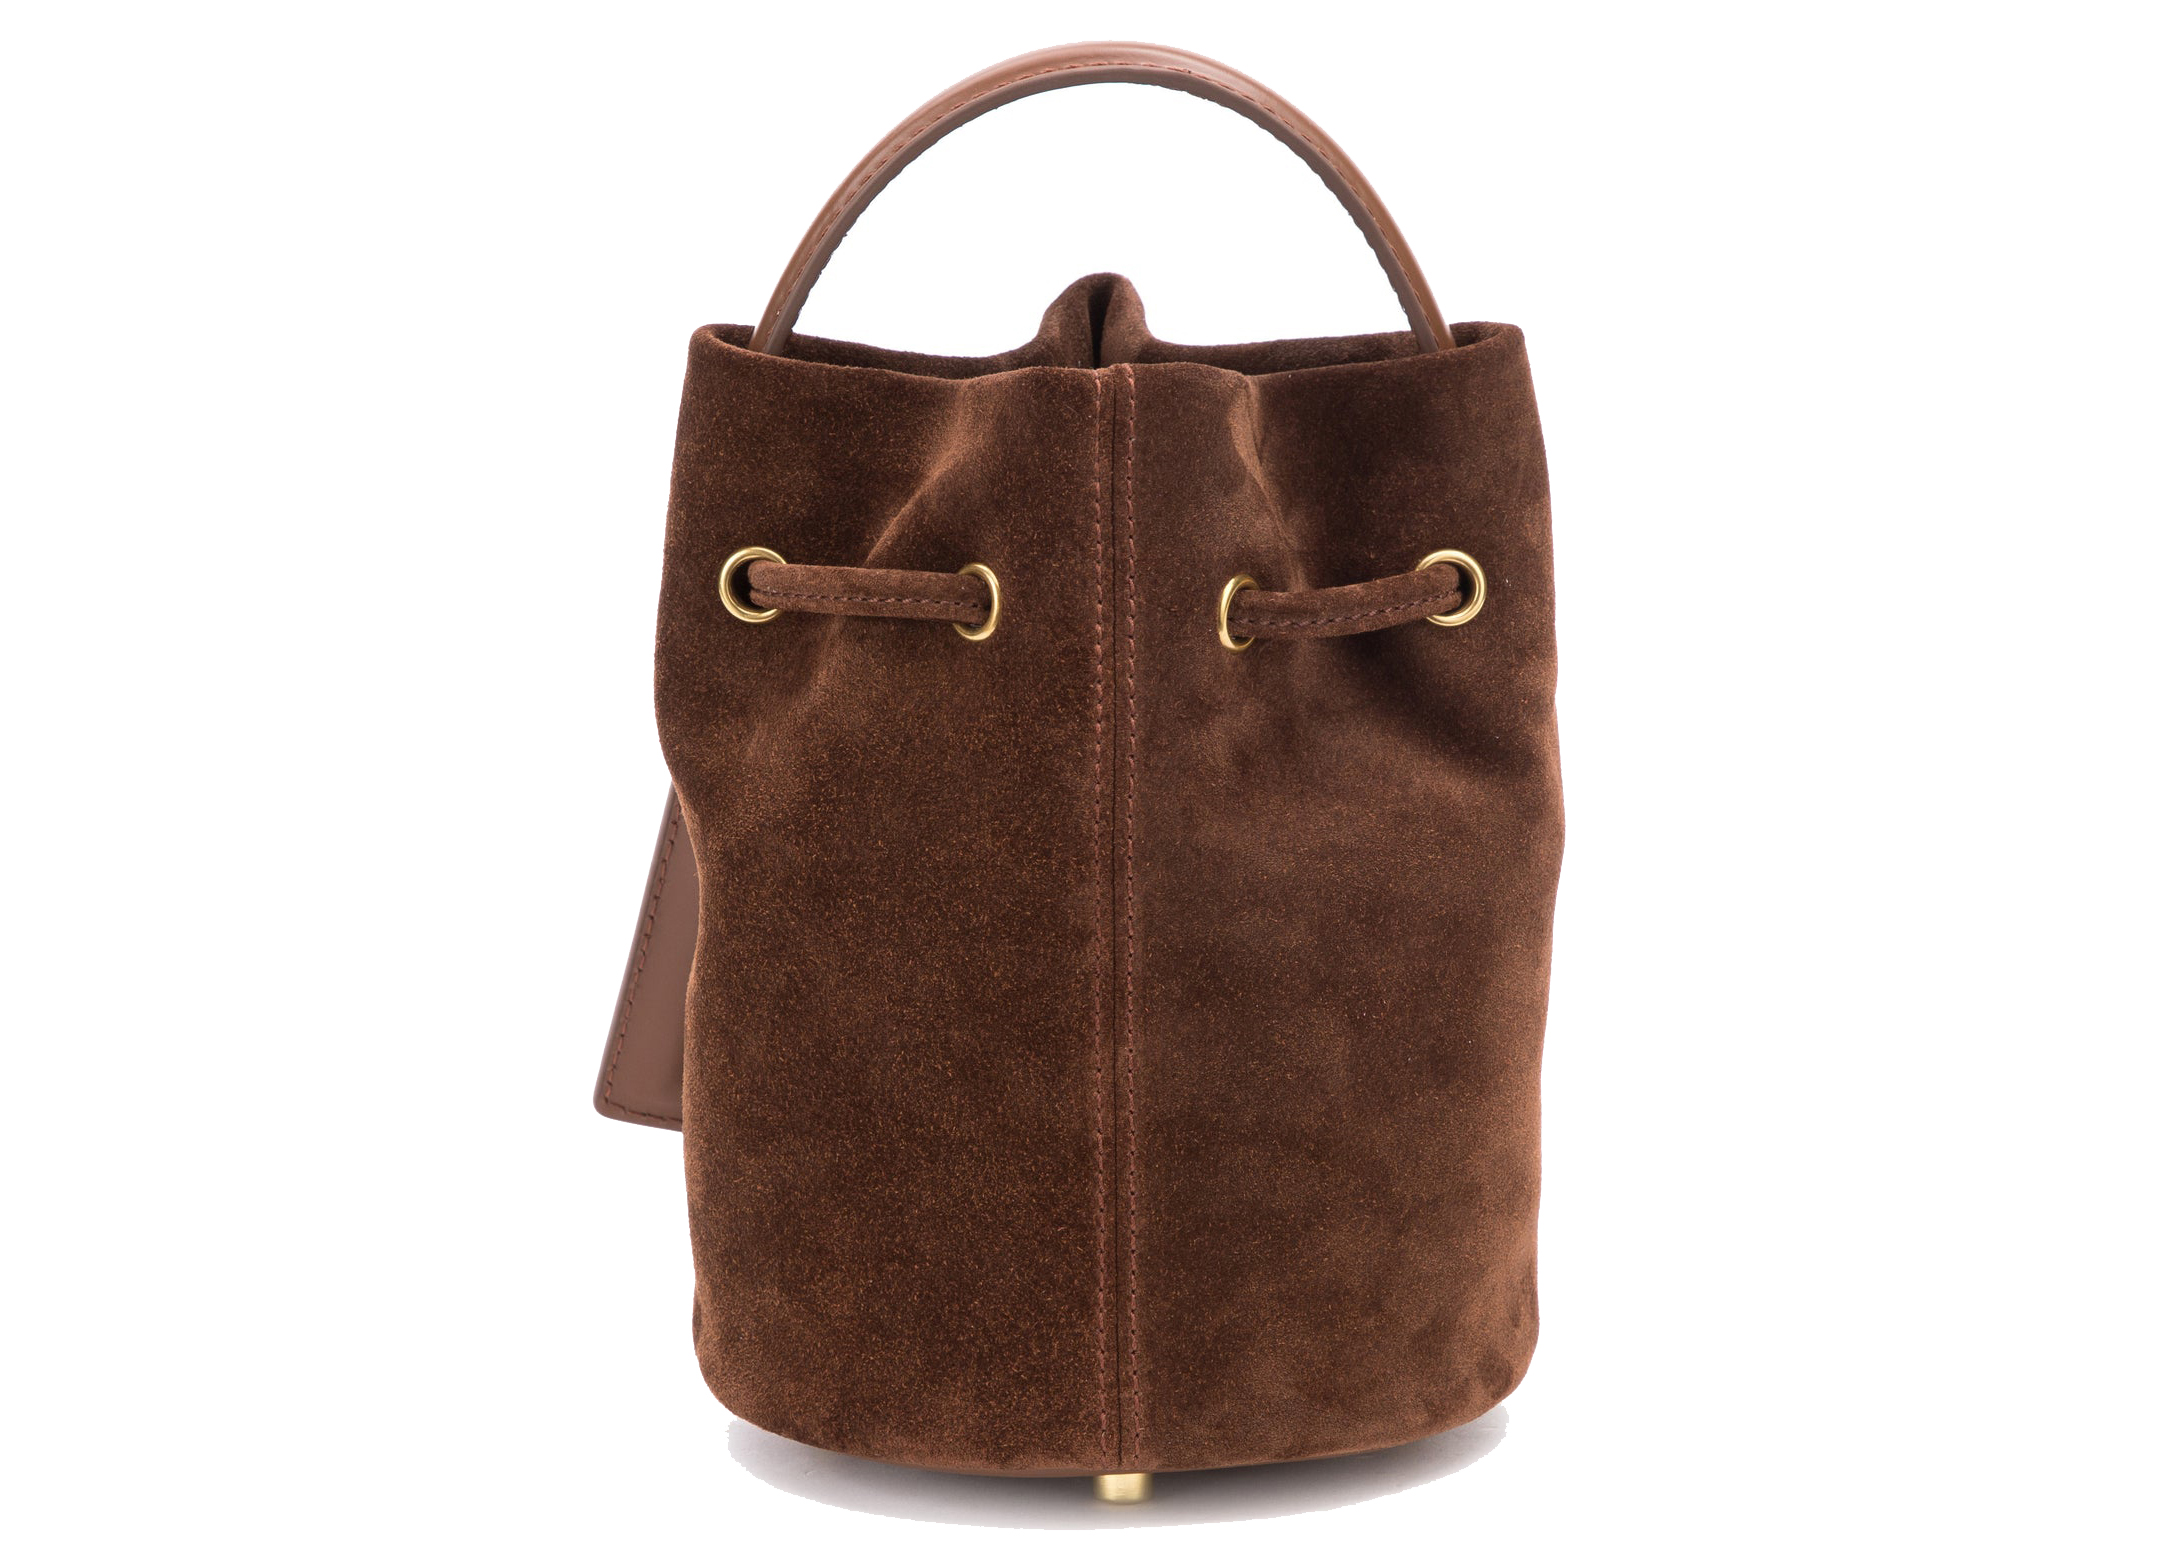 Zahab Kamal Khan on LinkedIn: Thank you @posh_handbags for amazing gifts.  Handbags are amazing ❤ I… | 24 comments